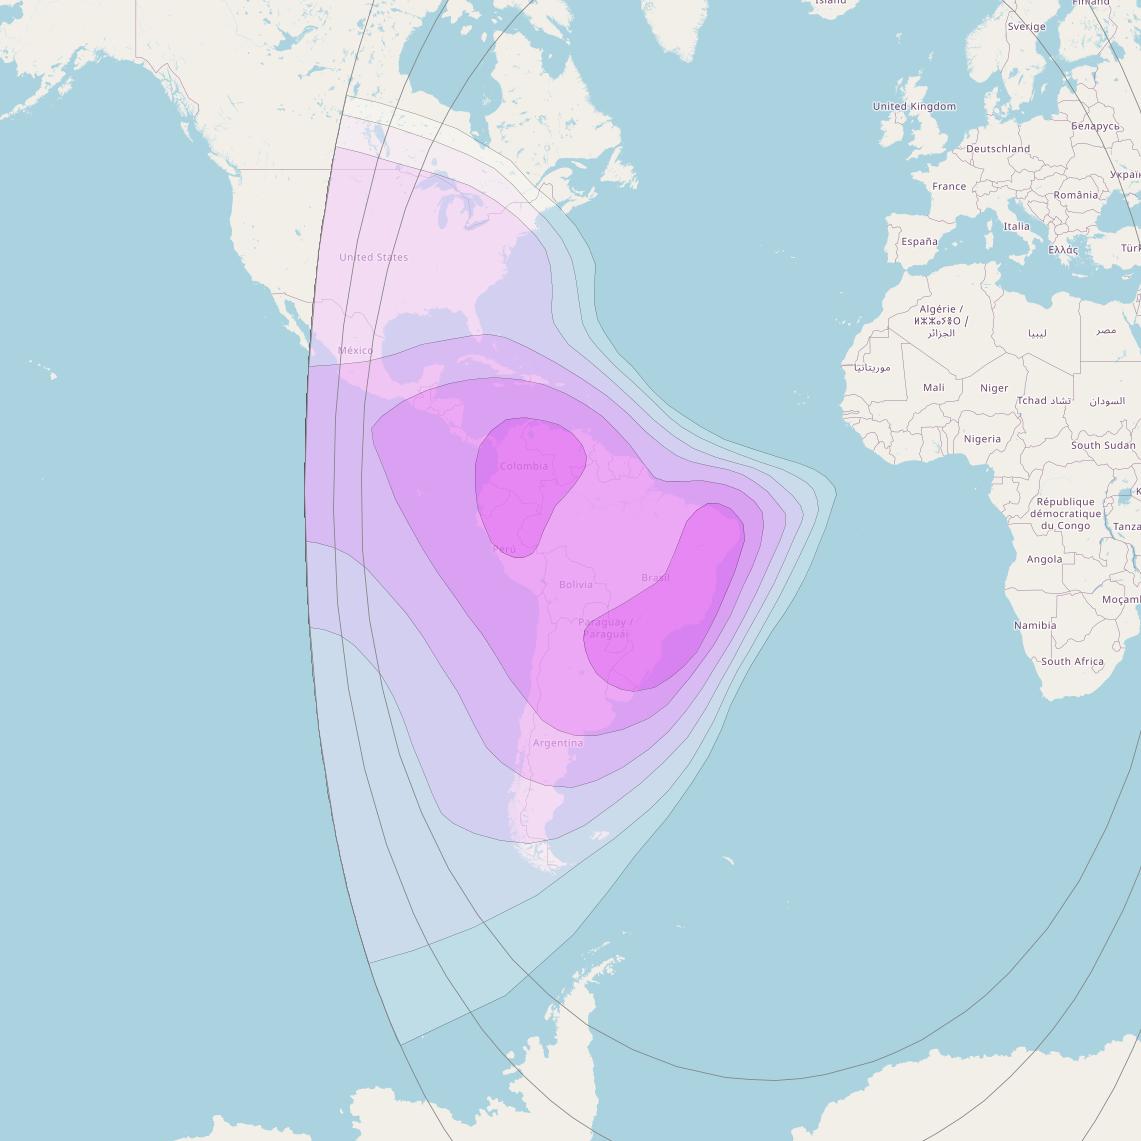 Hispasat 30W-6 at 30° W downlink C-band Americas beam coverage map